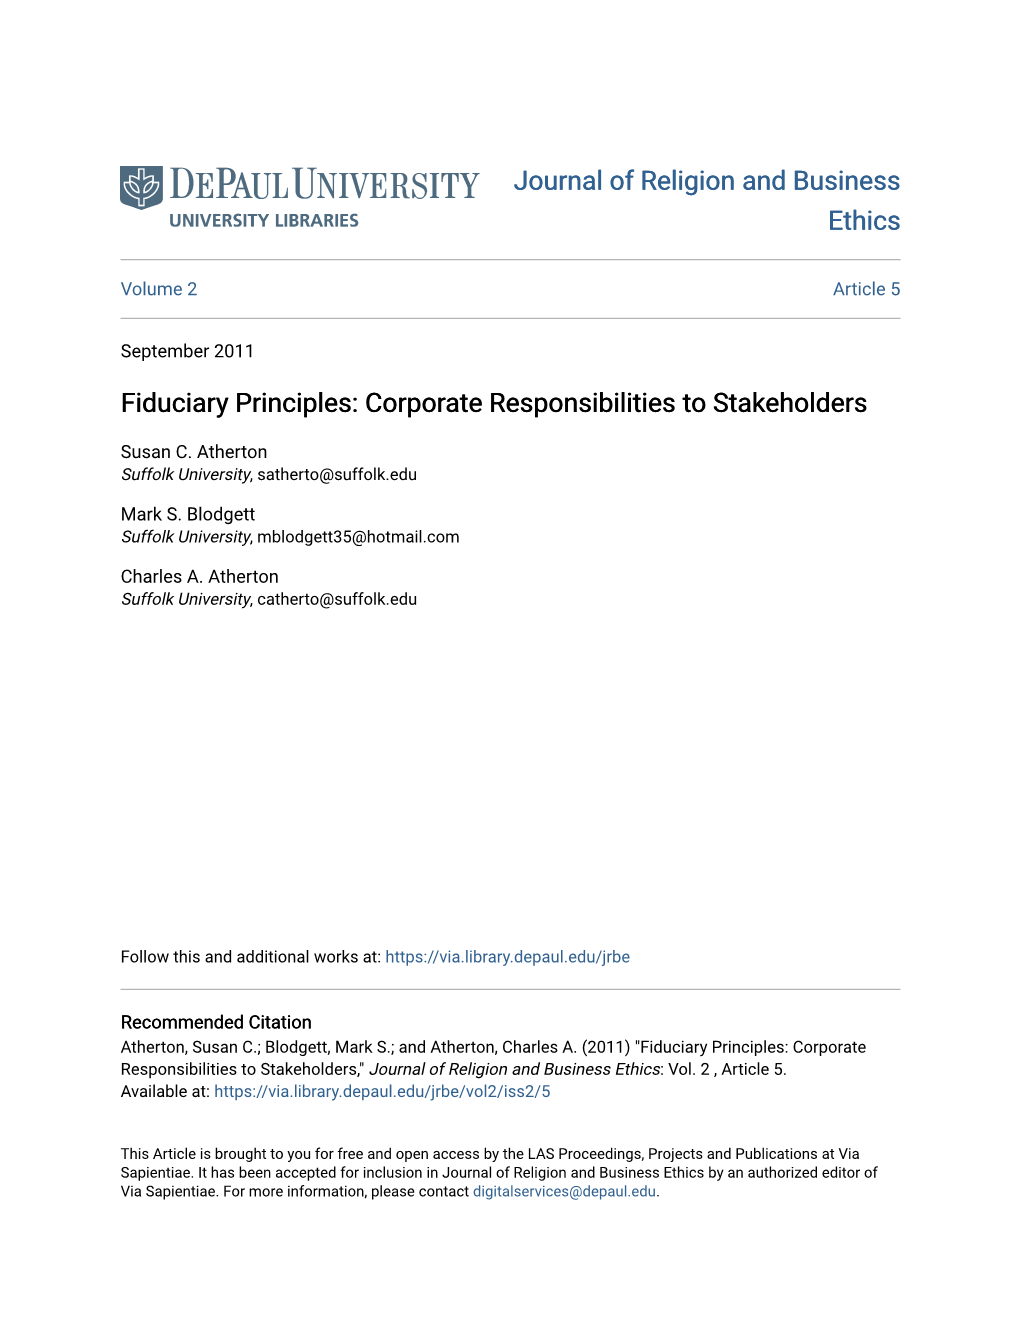 Fiduciary Principles: Corporate Responsibilities to Stakeholders